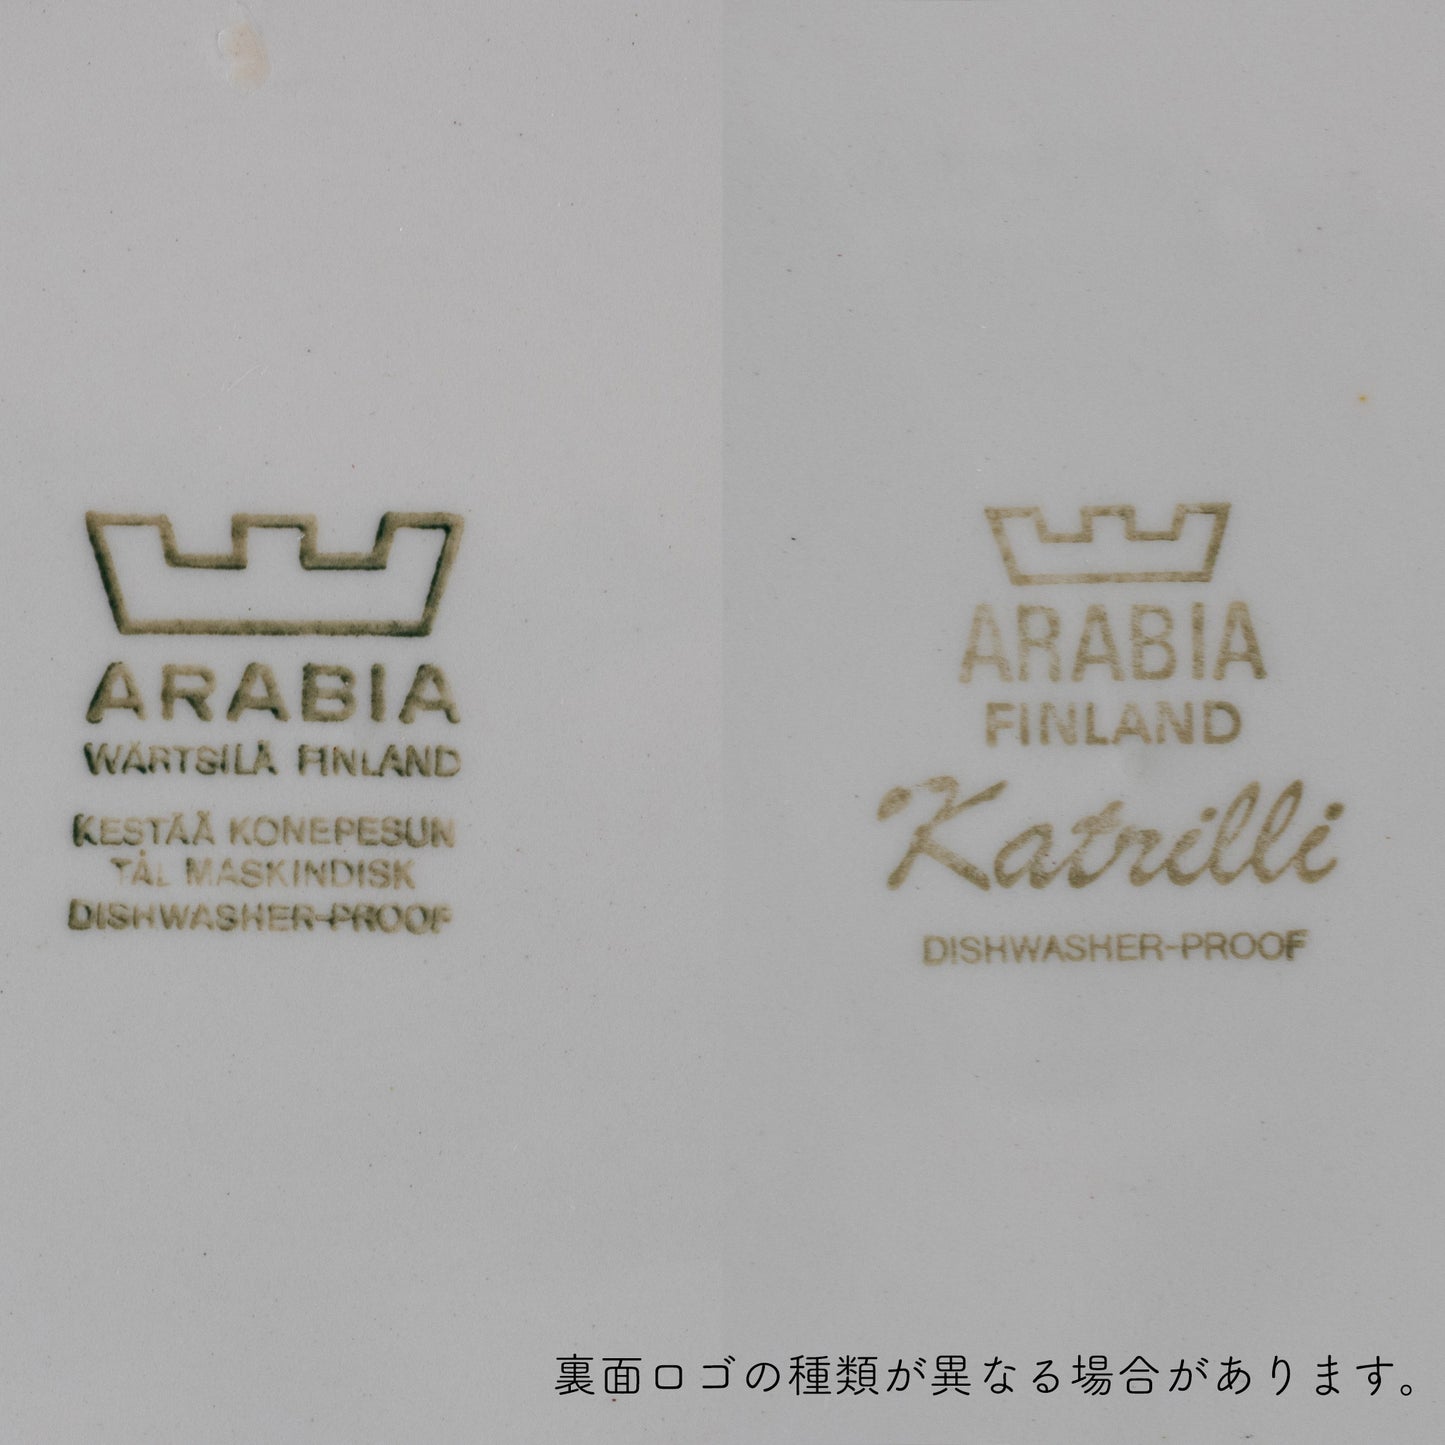 katrilli (カトリーリ) plate 20.0cm / arabia (アラビア)